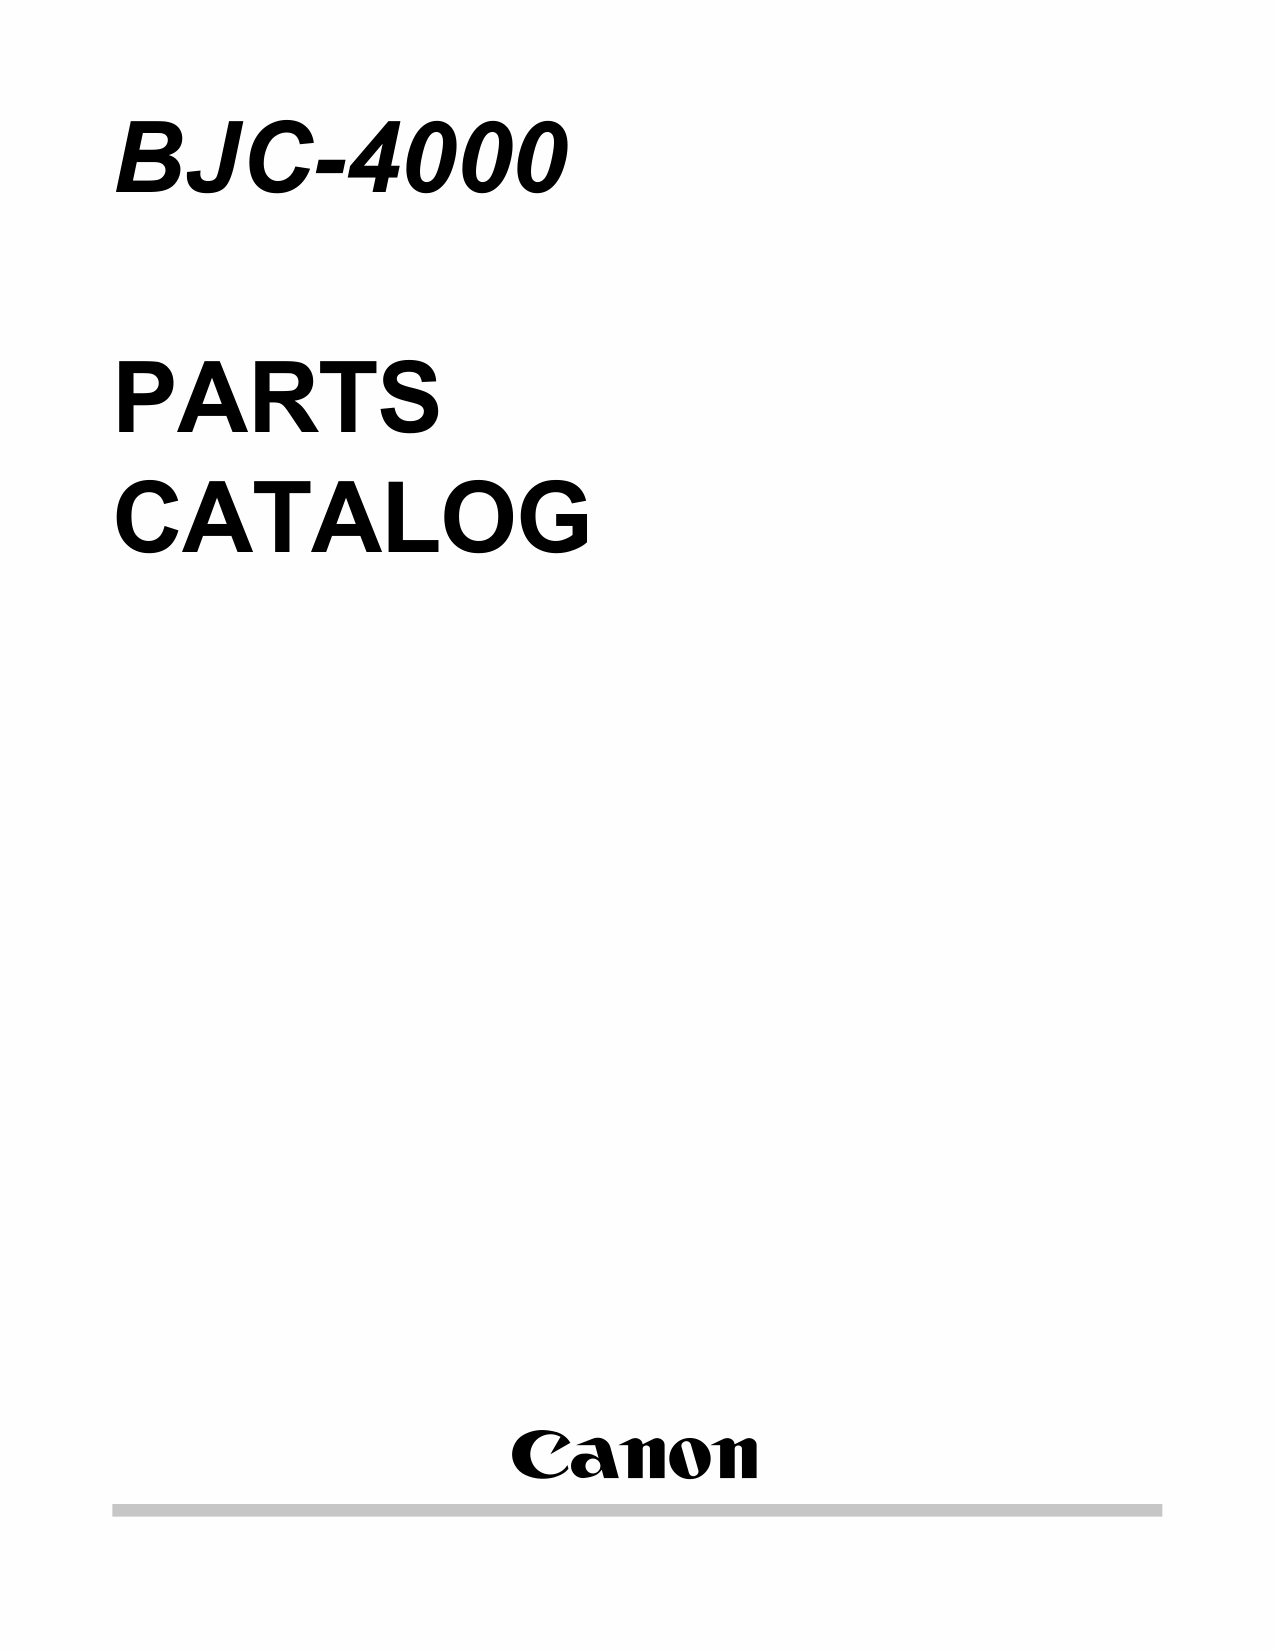 Canon BubbleJet BJC-4000 Parts Catalog Manual-1